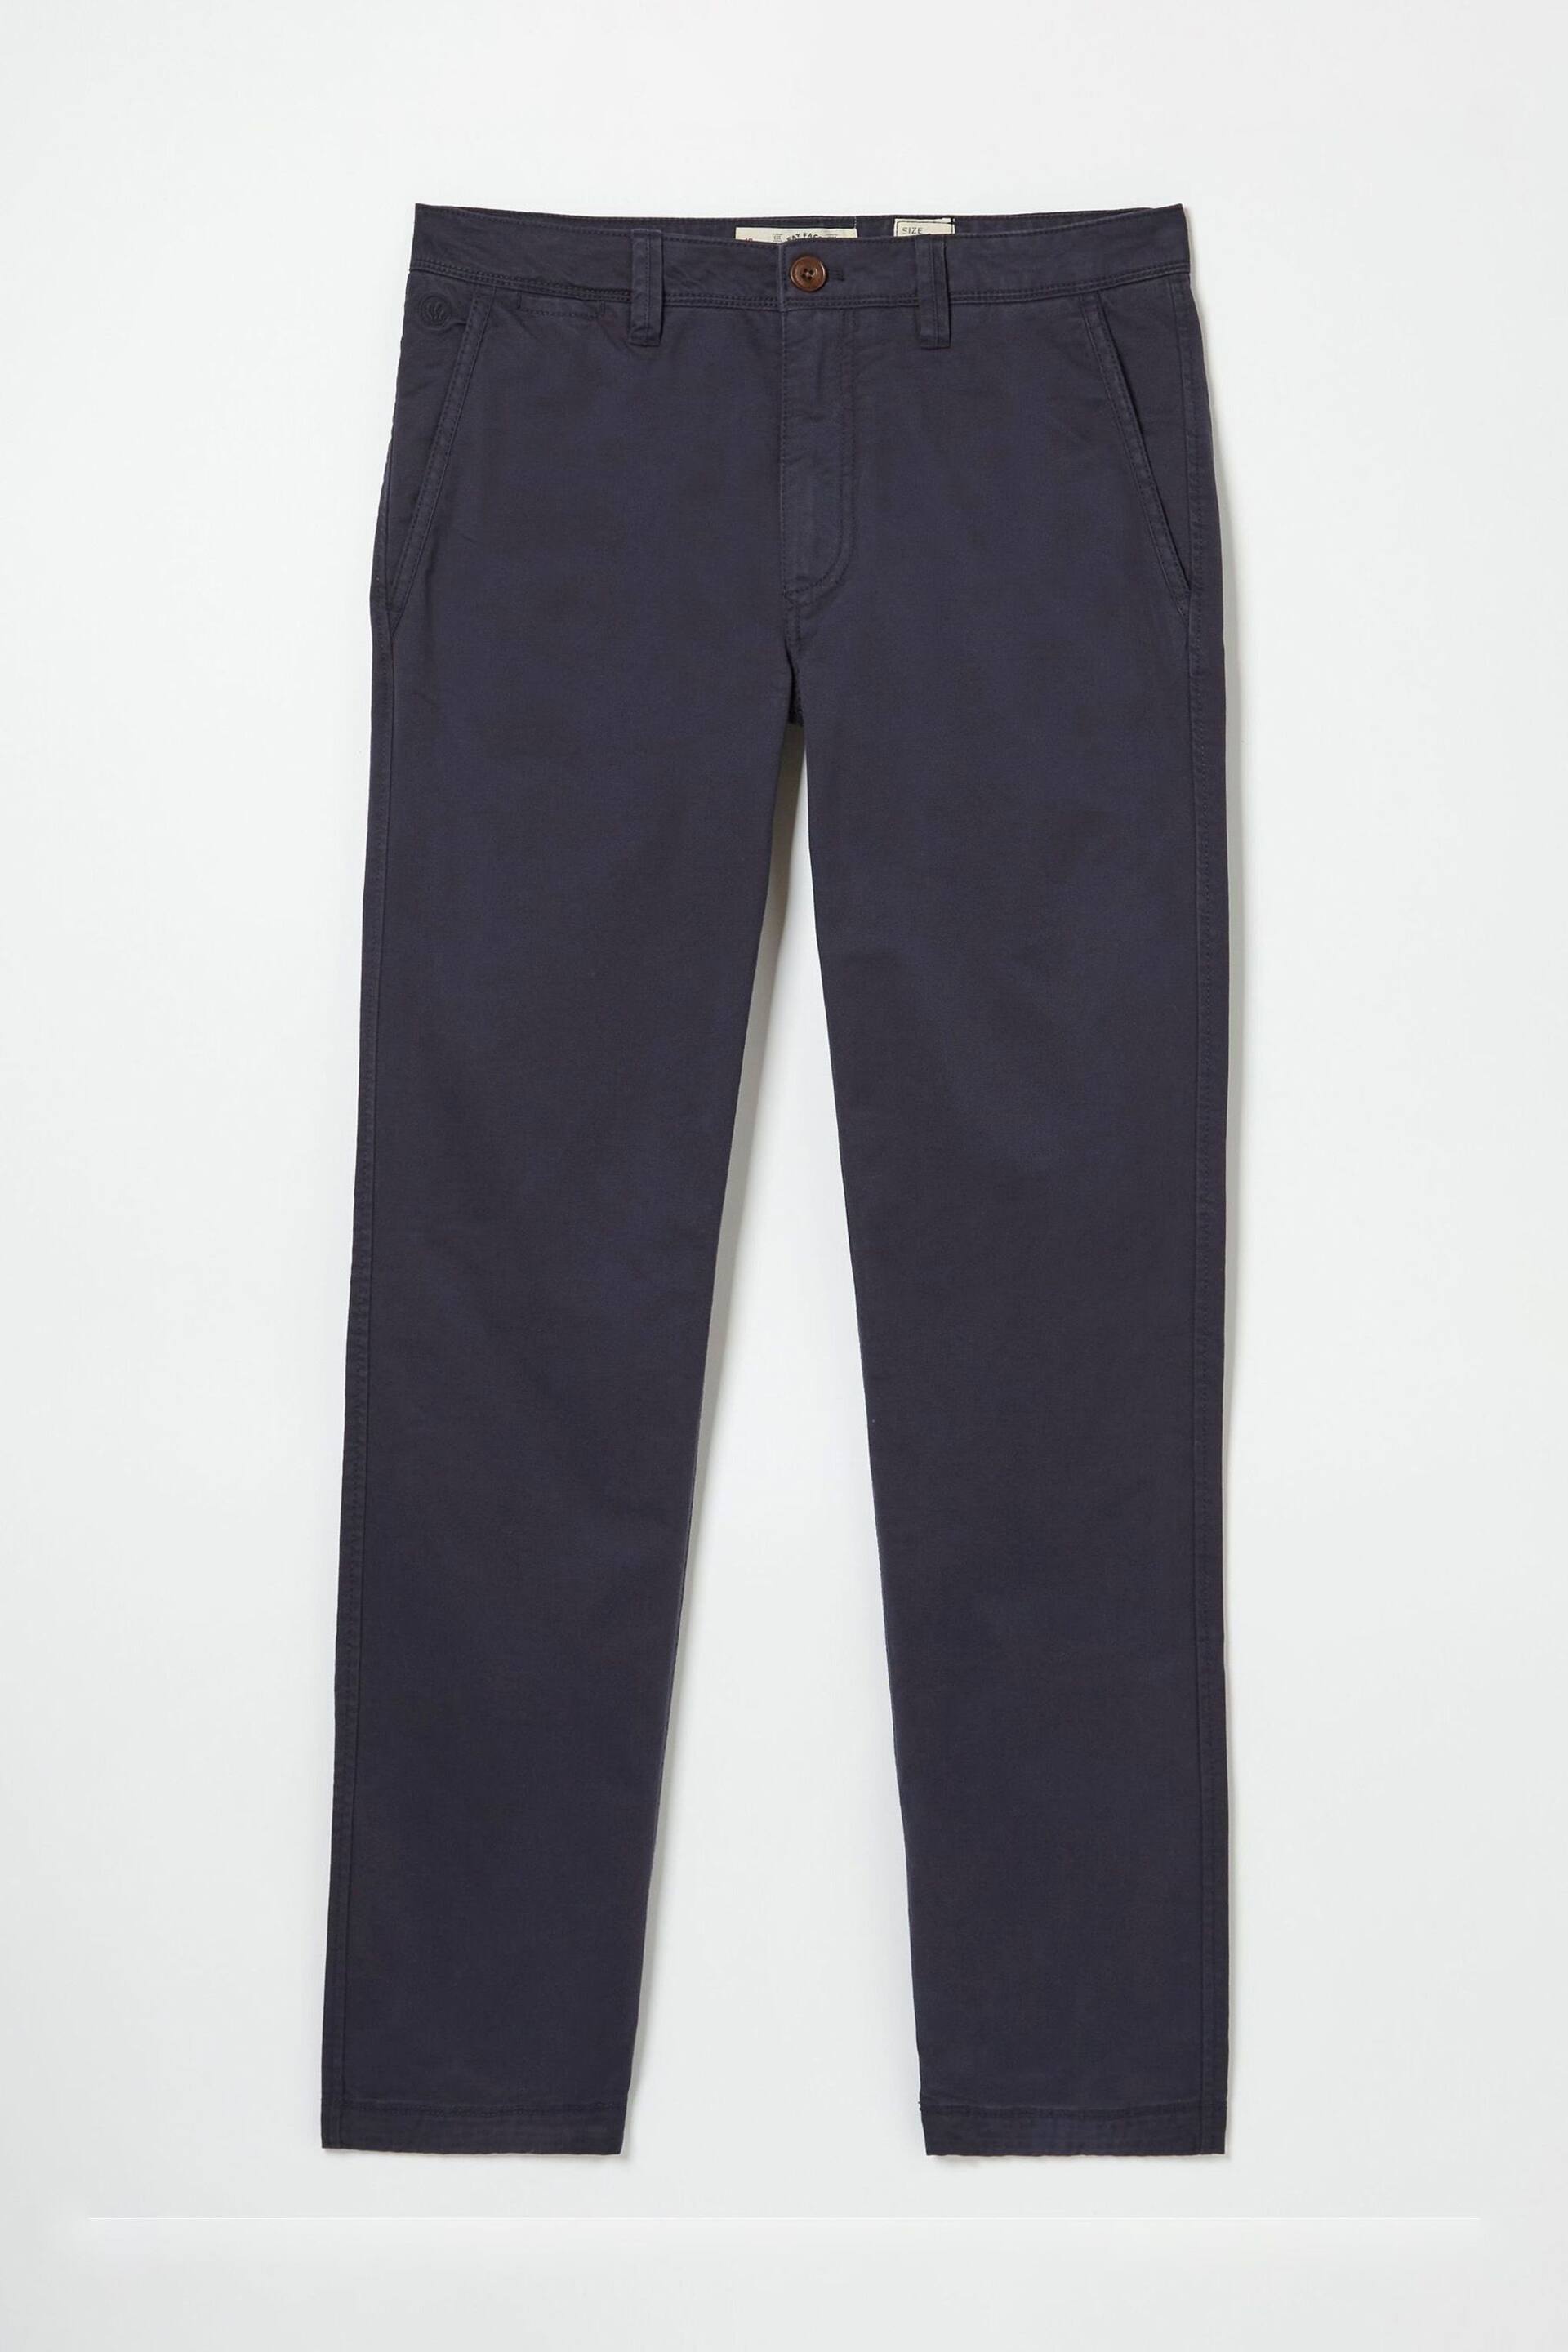 FatFace Blue Modern Coastal Trousers - Image 5 of 5